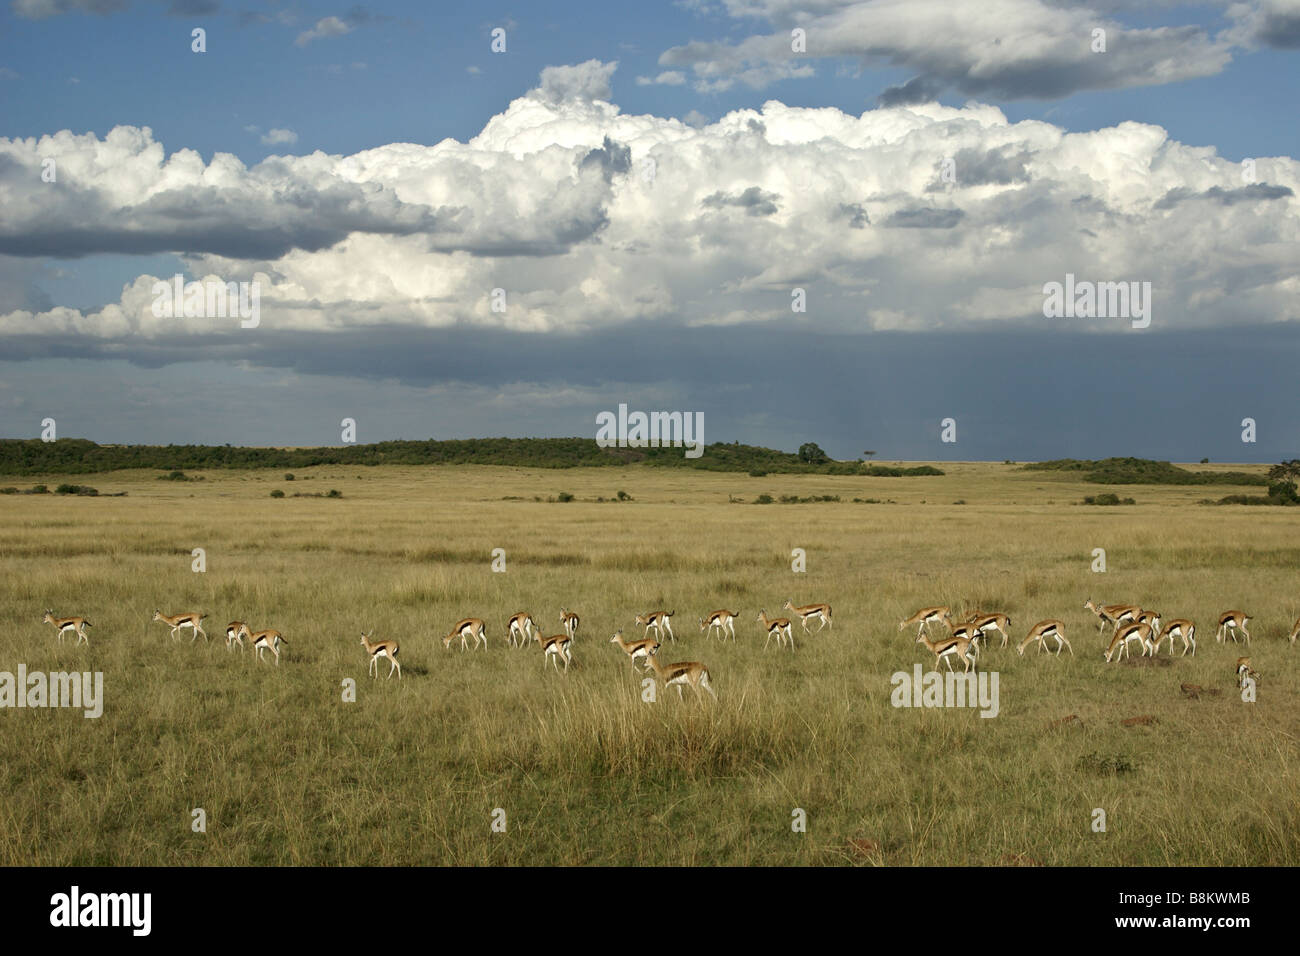 Herd of Thomson's gazelles grazing under stormy skies, Masai Mara, Kenya Stock Photo